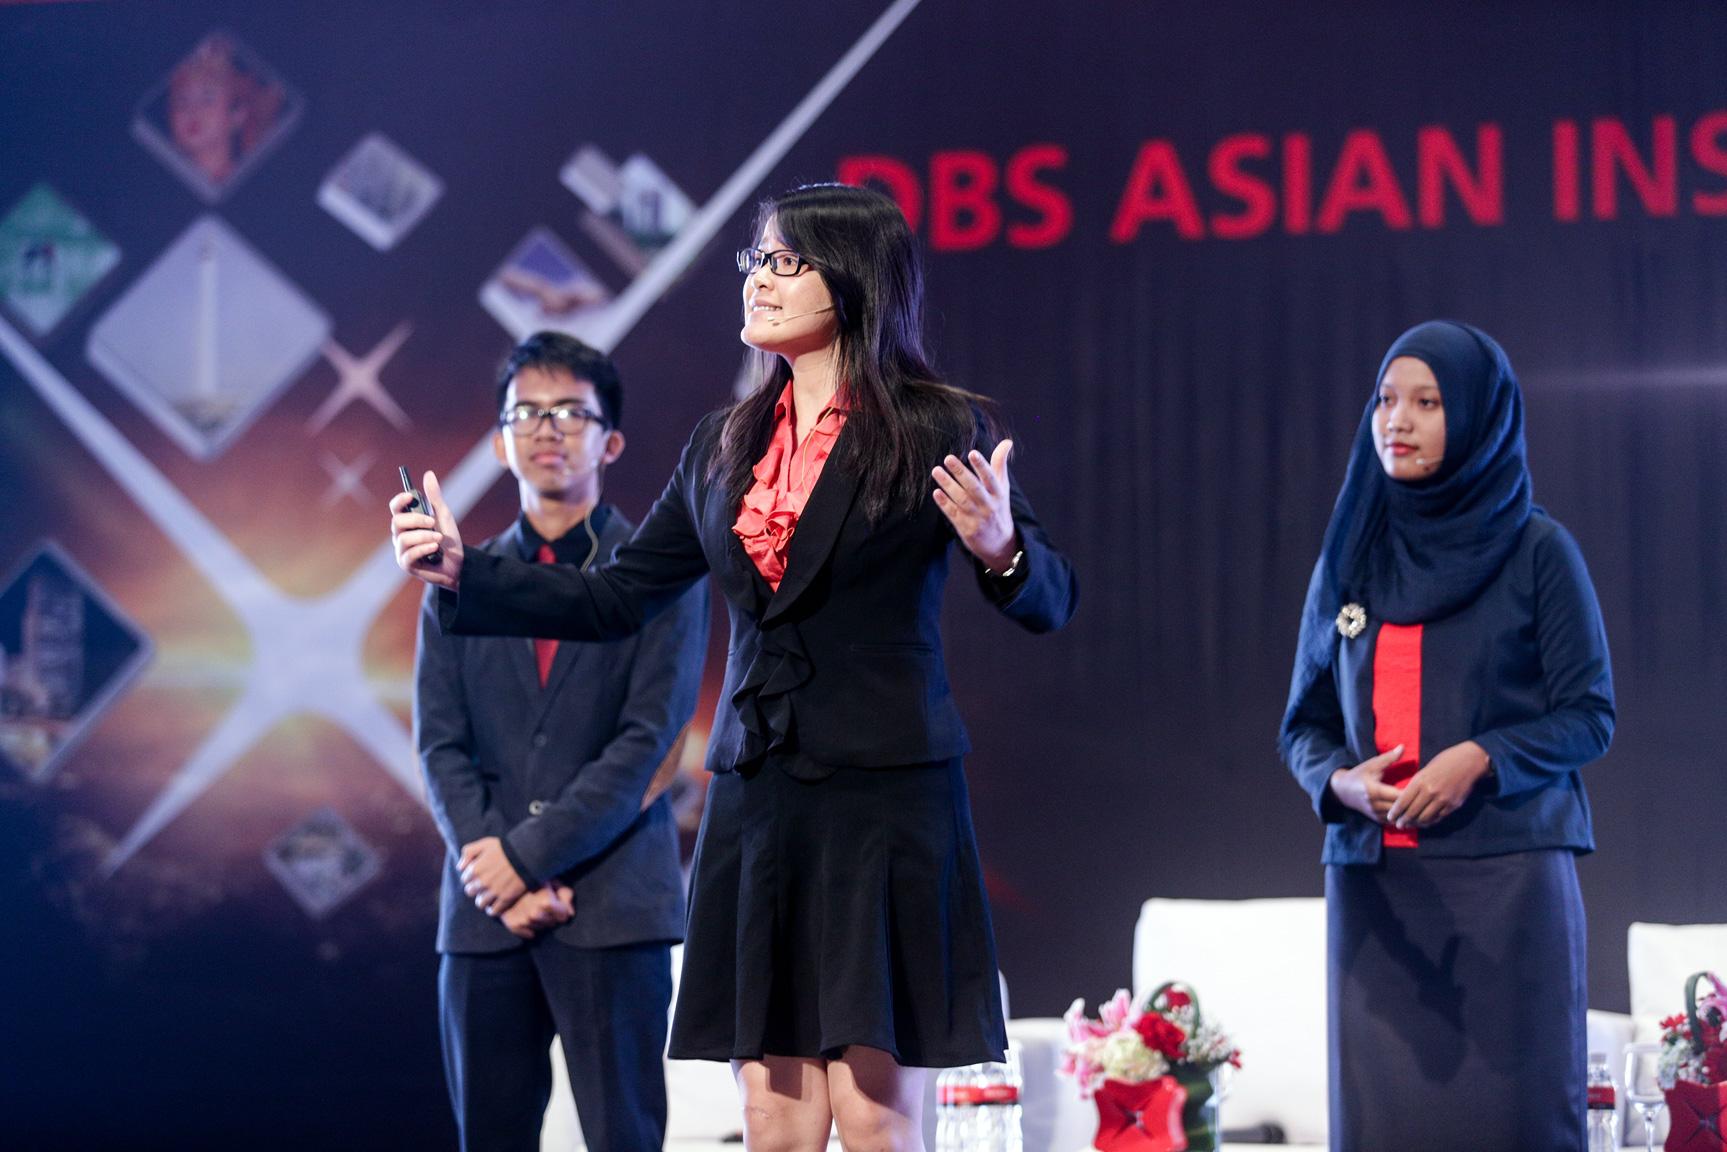 \nFelicia Putri Tjiasaka dari Univ. President, Jakarta, juara 2 DBS Young Economist Stand-Up beraksi di hadapan peserta DBS Asian Insight Conference 2015 di Jakarta.